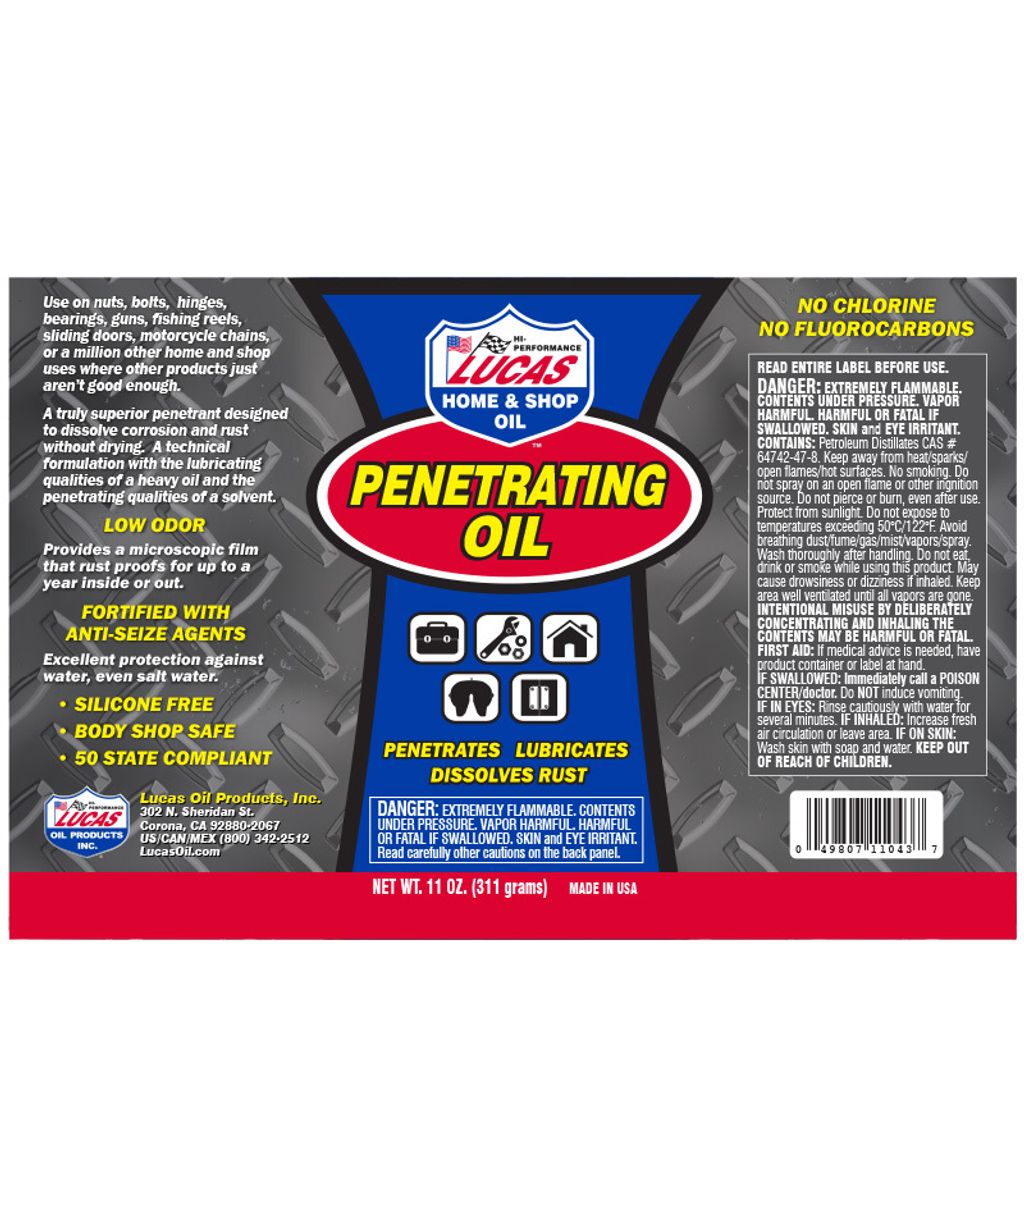 zhd-penetrating-oil-label